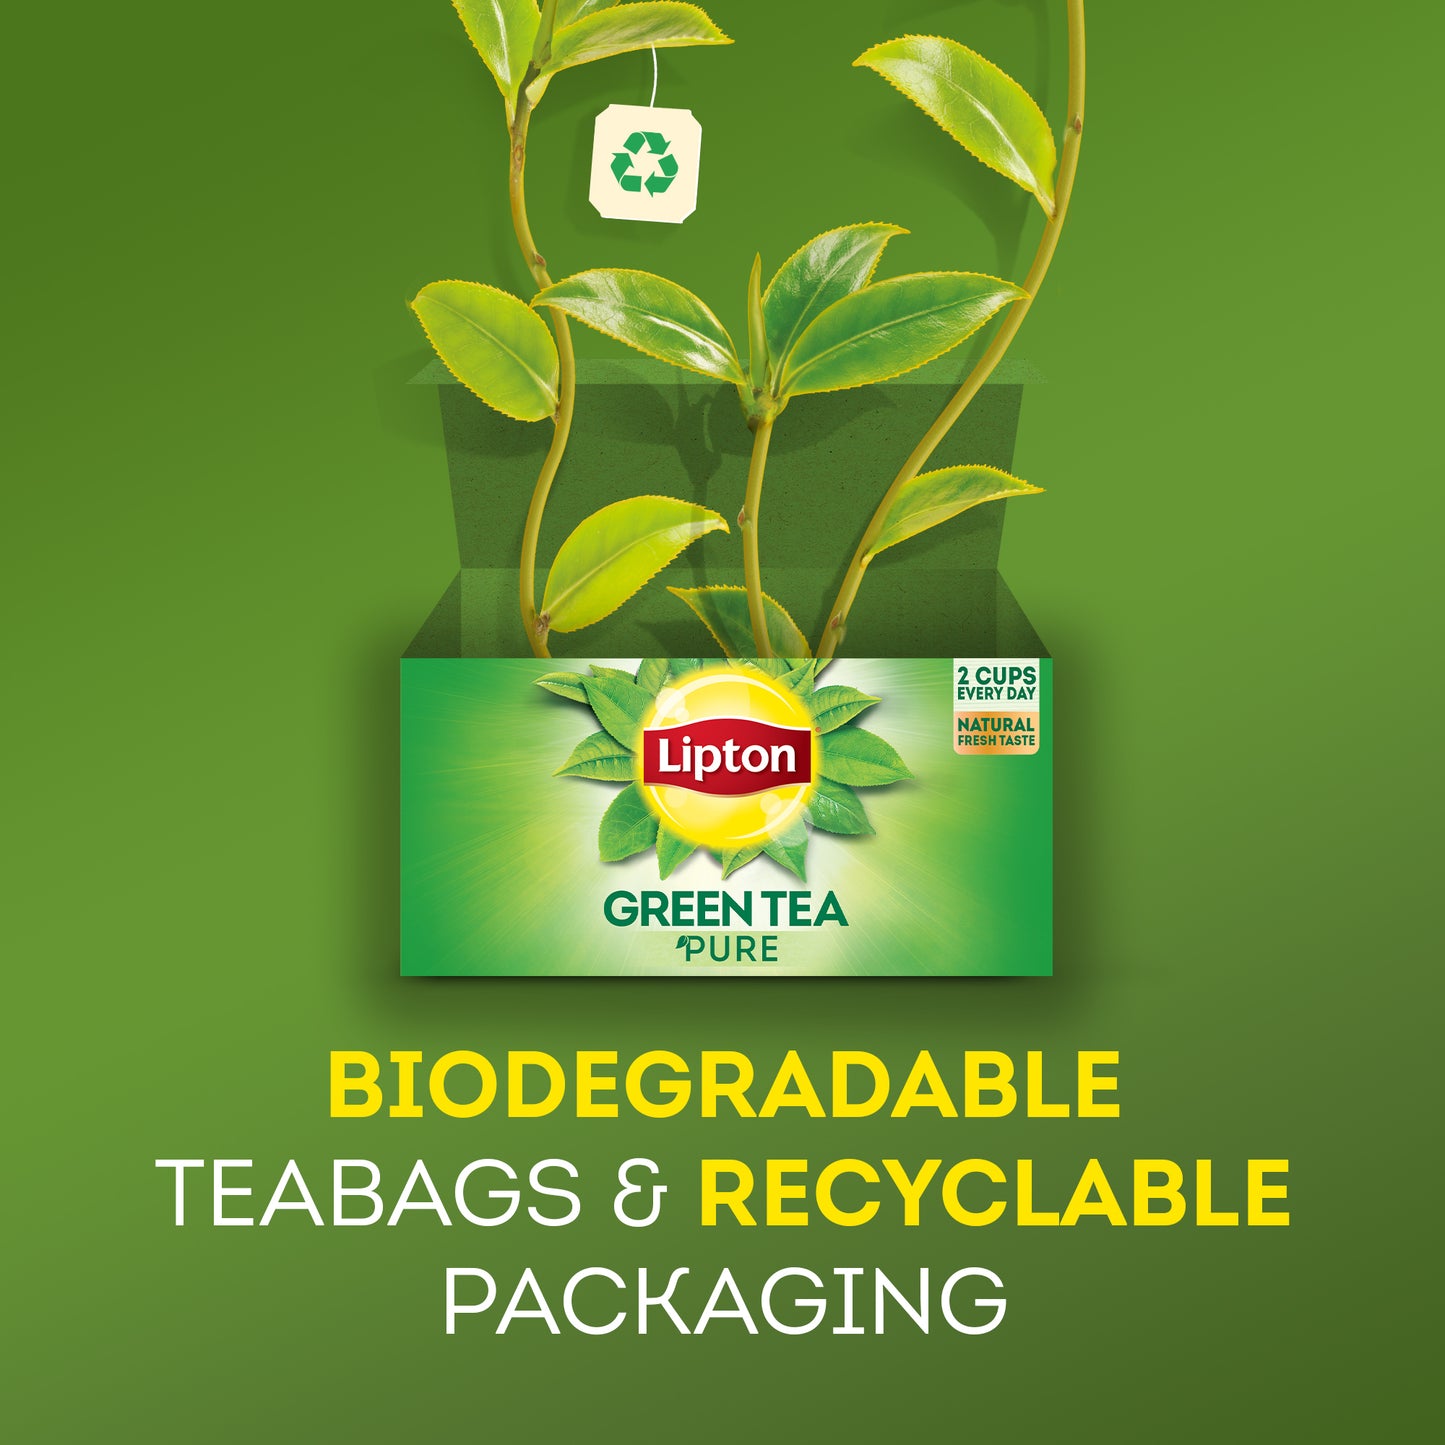 Lipton Green Tea Pure, 25 Envelope Teabags